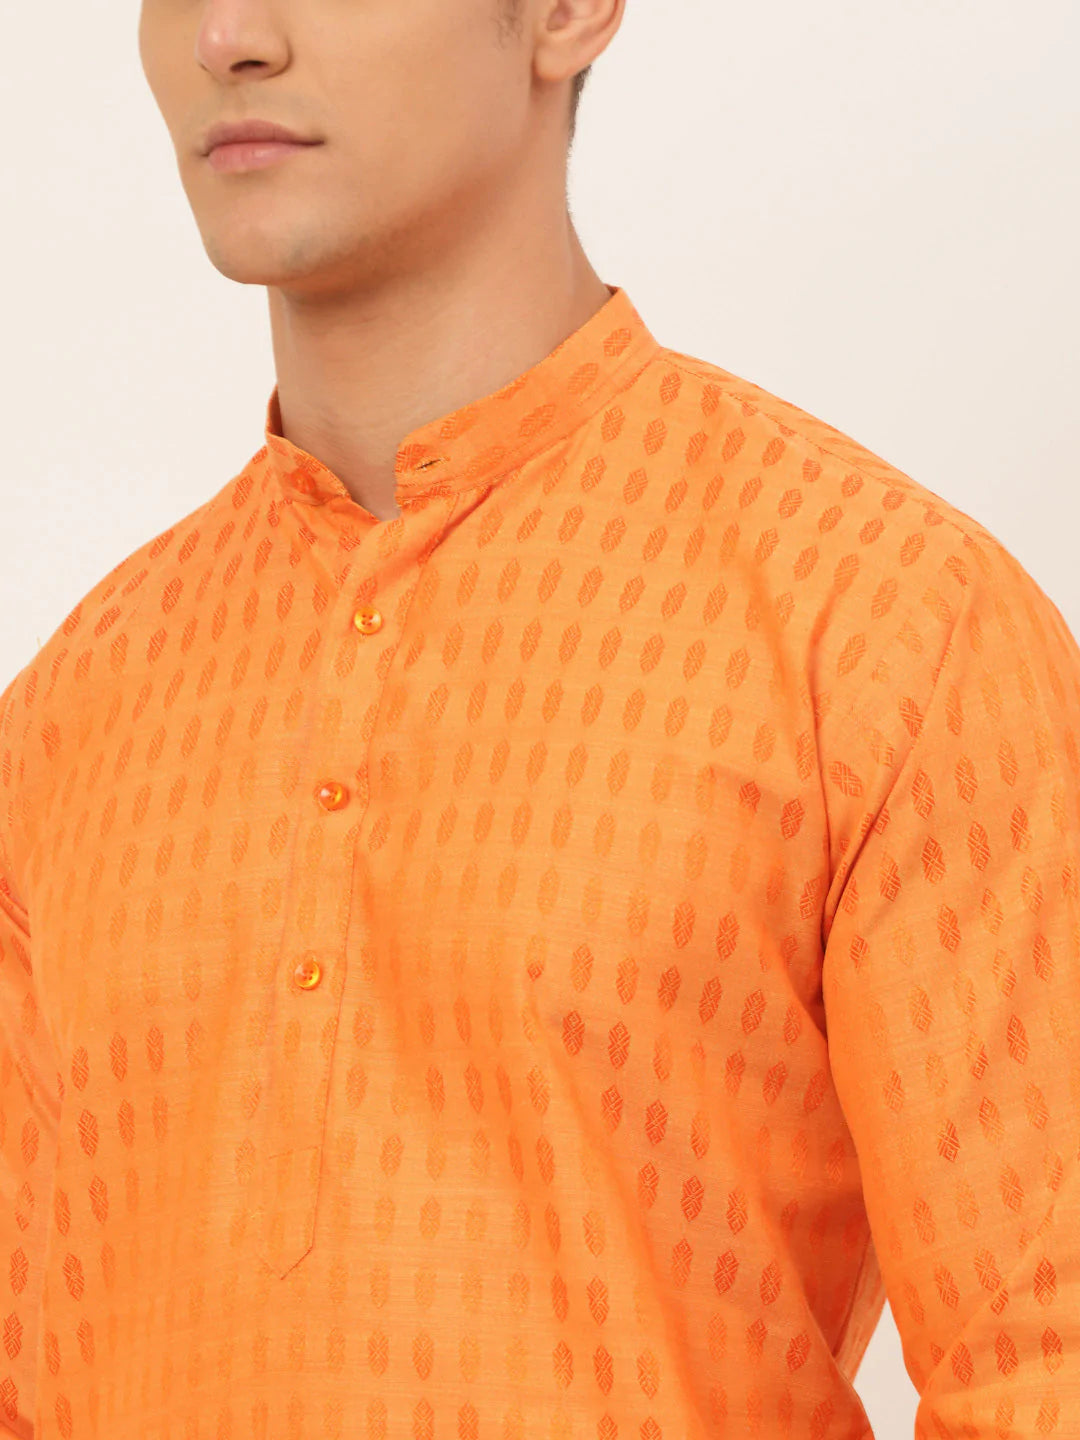 Jompers Men's Orange Woven Design Kurta Pajama ( JOKP 675 Orange )